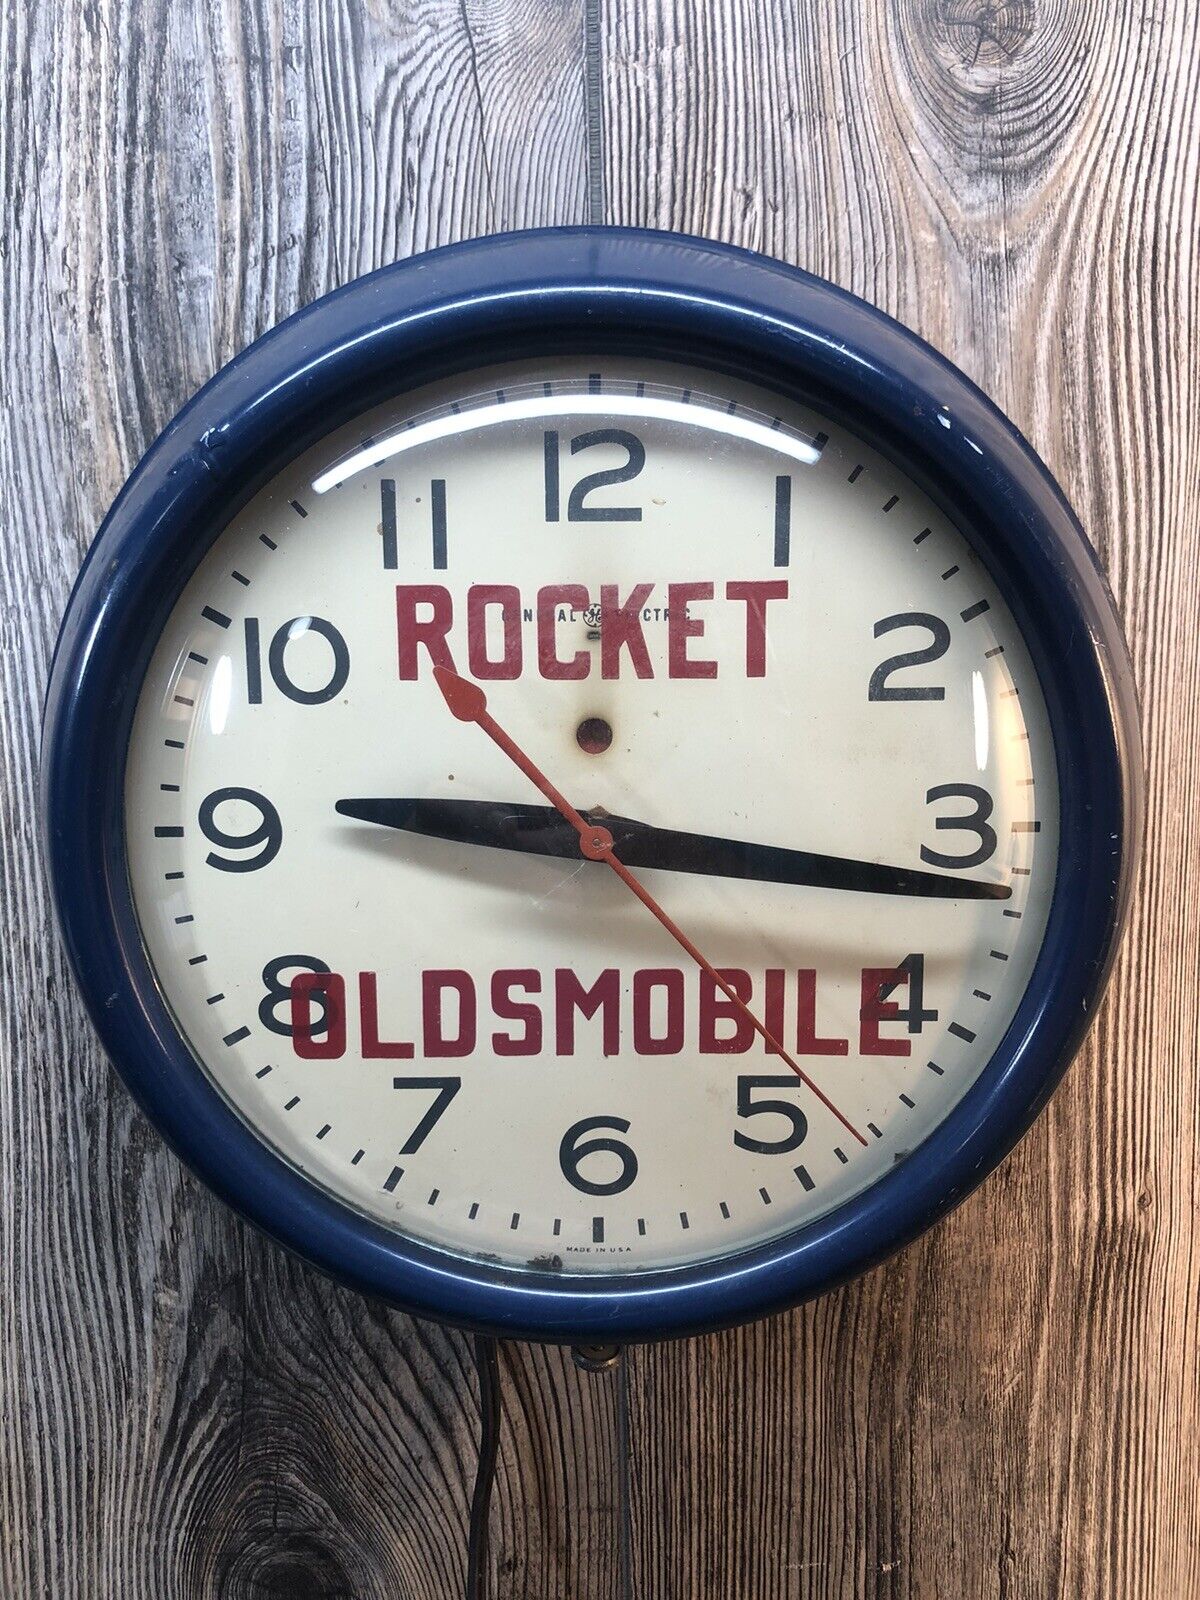 General Electric 2908 Rocket Oldsmobile Custom Made Wall Clock 11\'\'